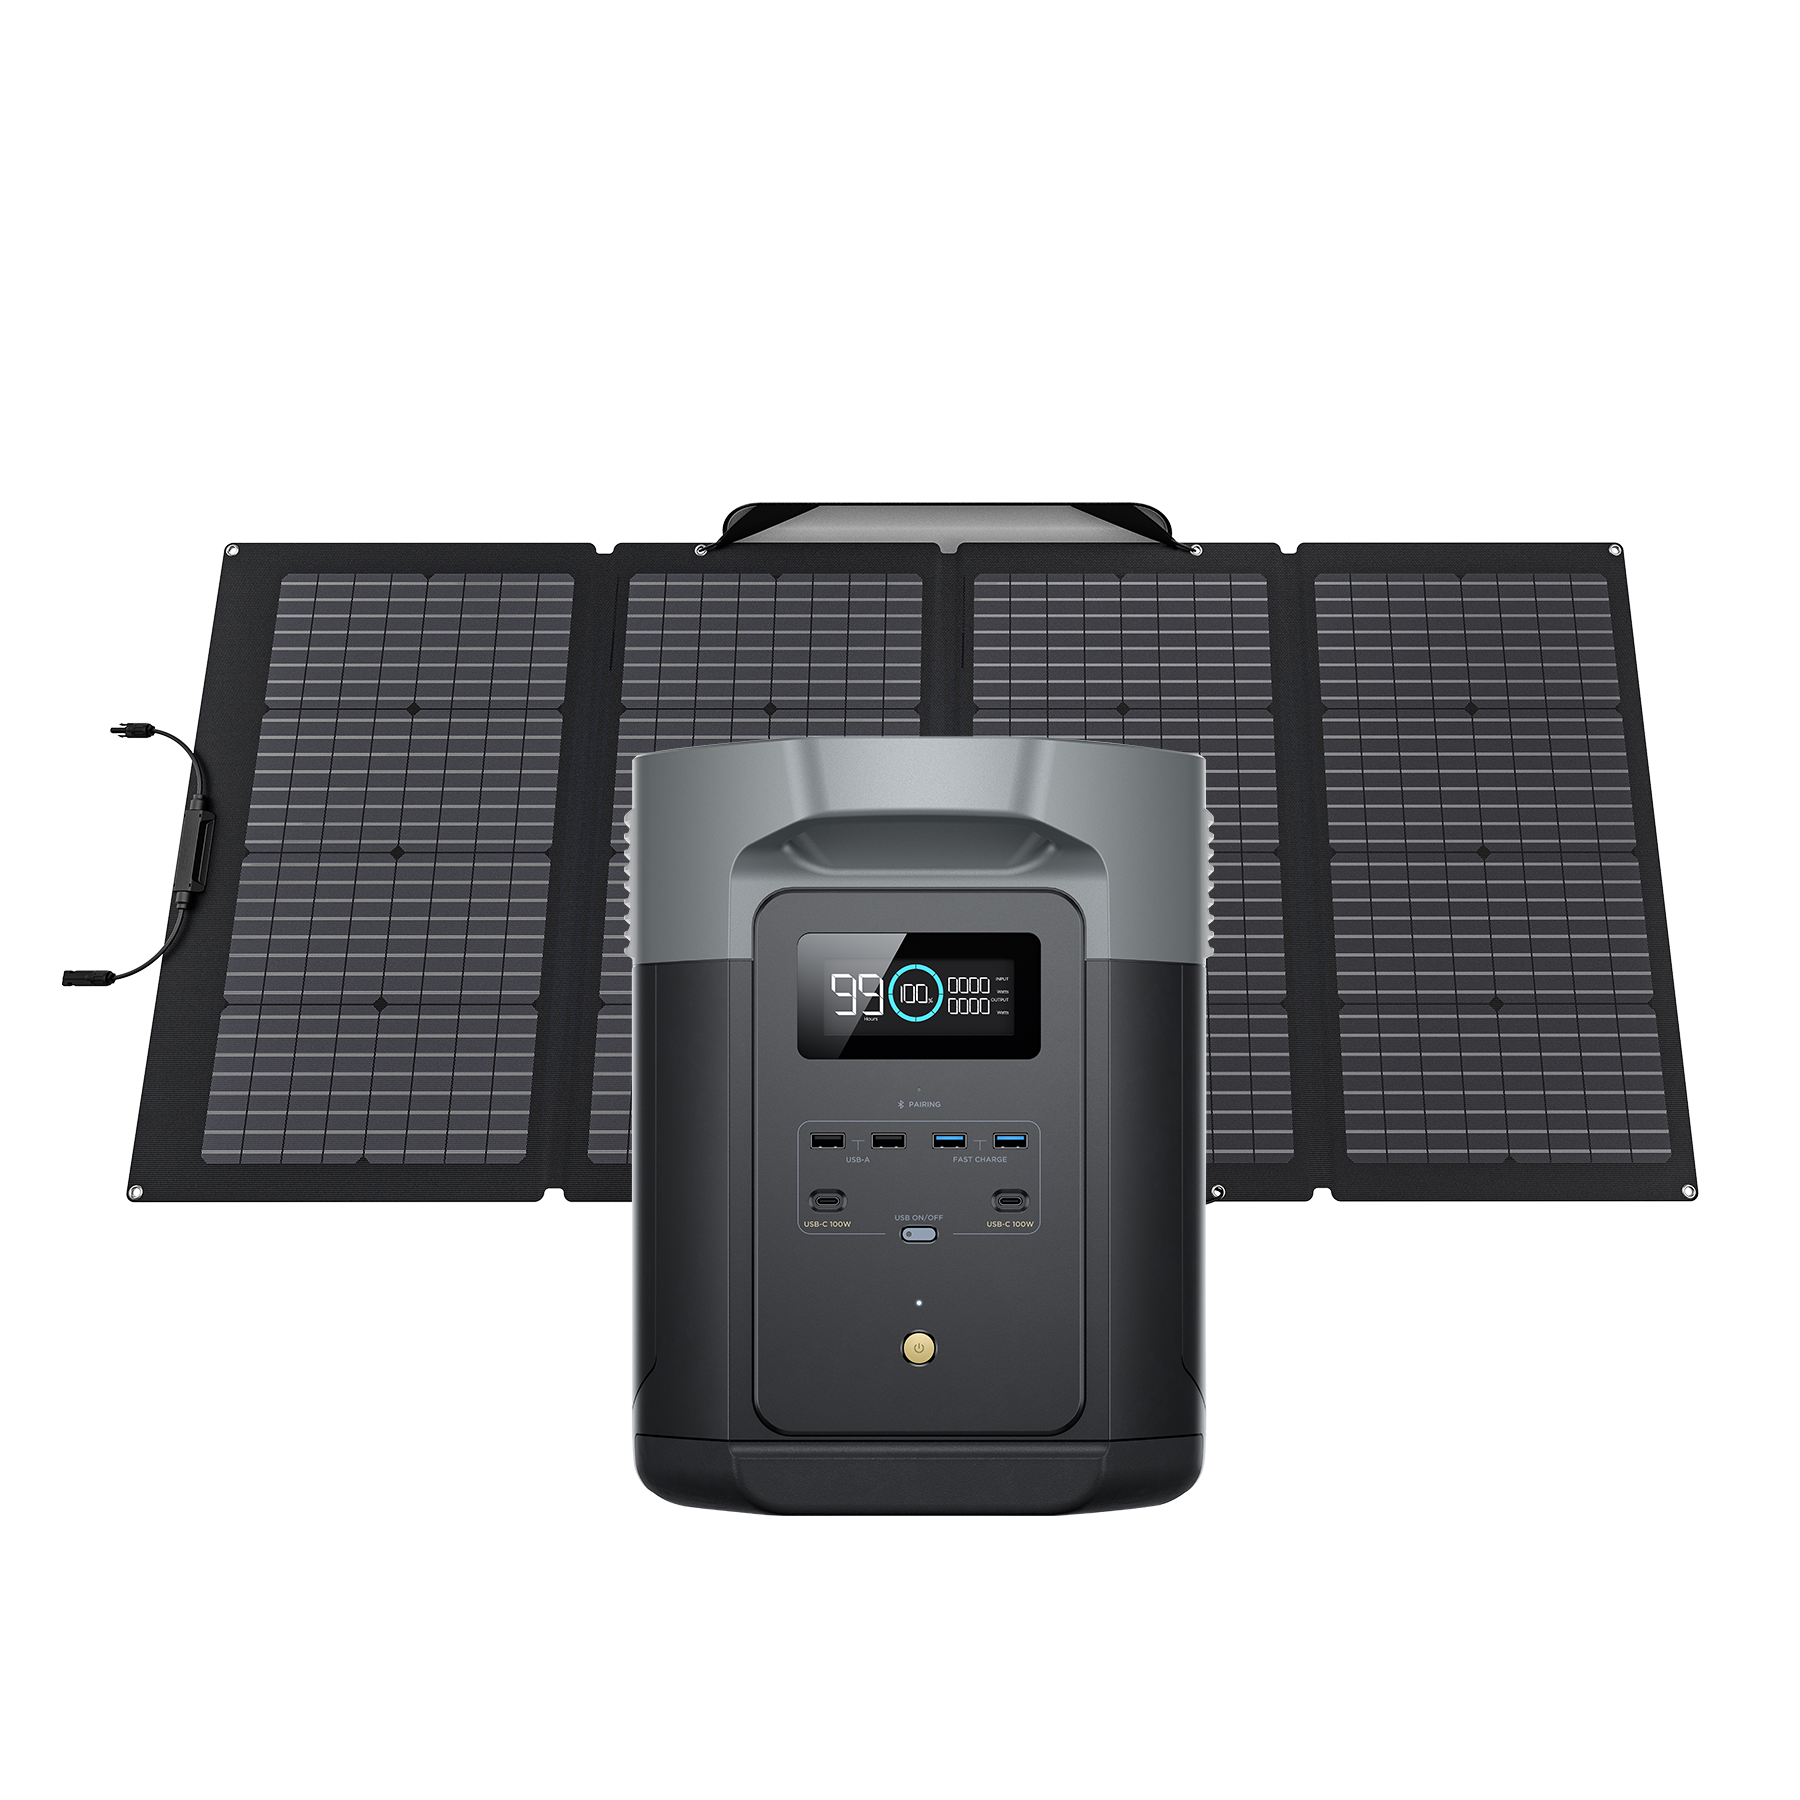 Combo Delta 2 Max + Panel Solar 220W + Bag Gratis - PowerMe